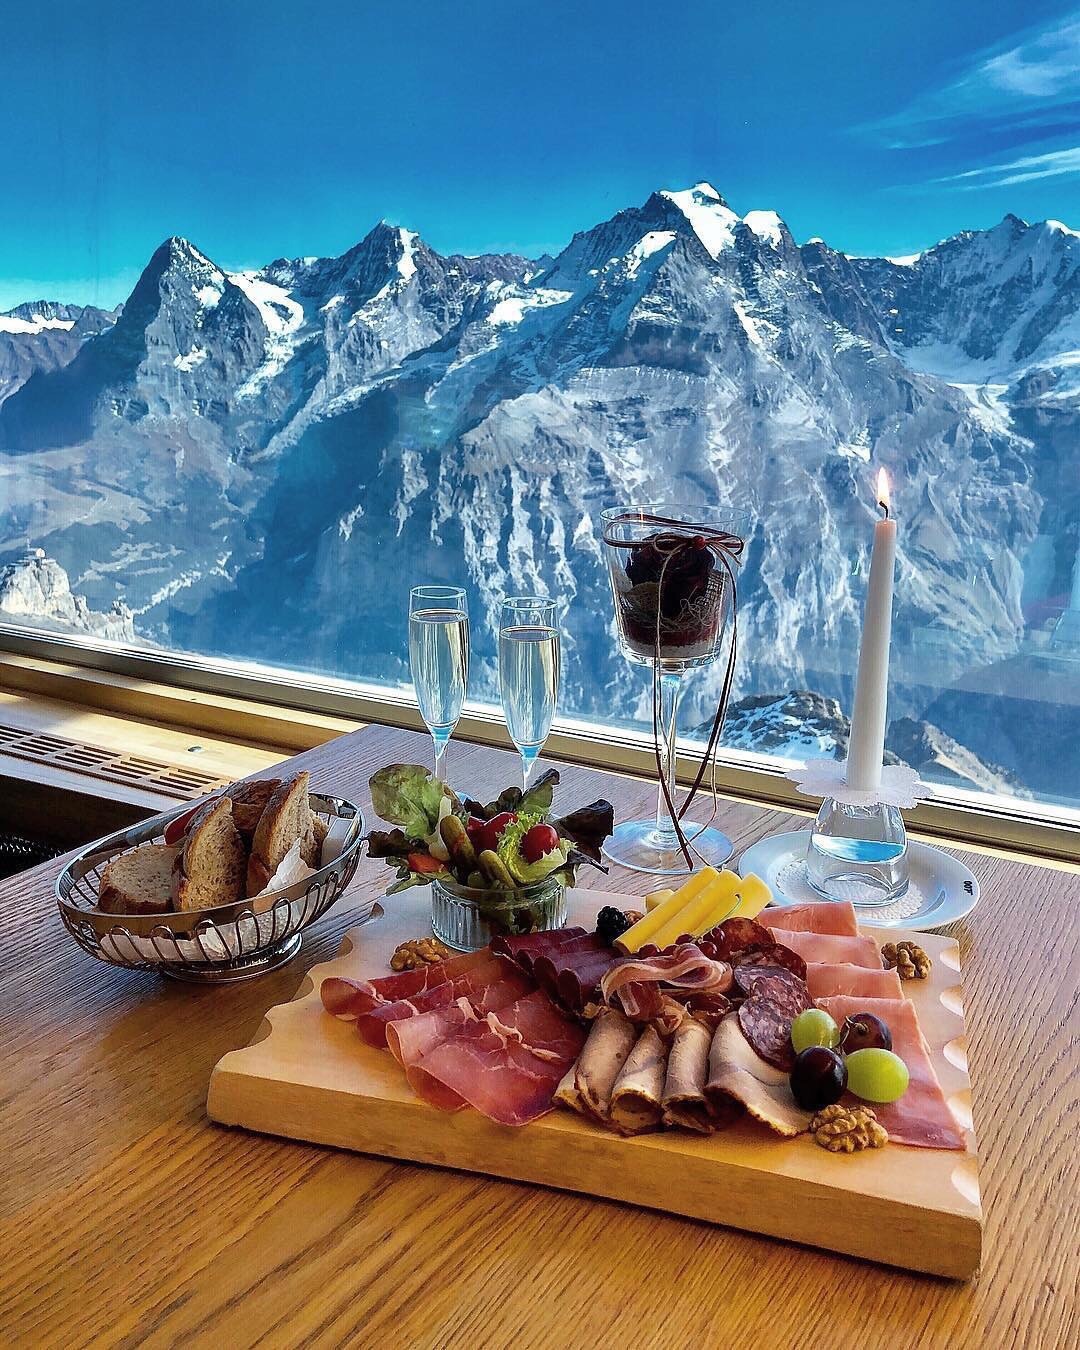 Завтраки красная поляна. Красивый завтрак. Завтрак в Альпах. Обед с видом на горы. Ужин с видом на горы.